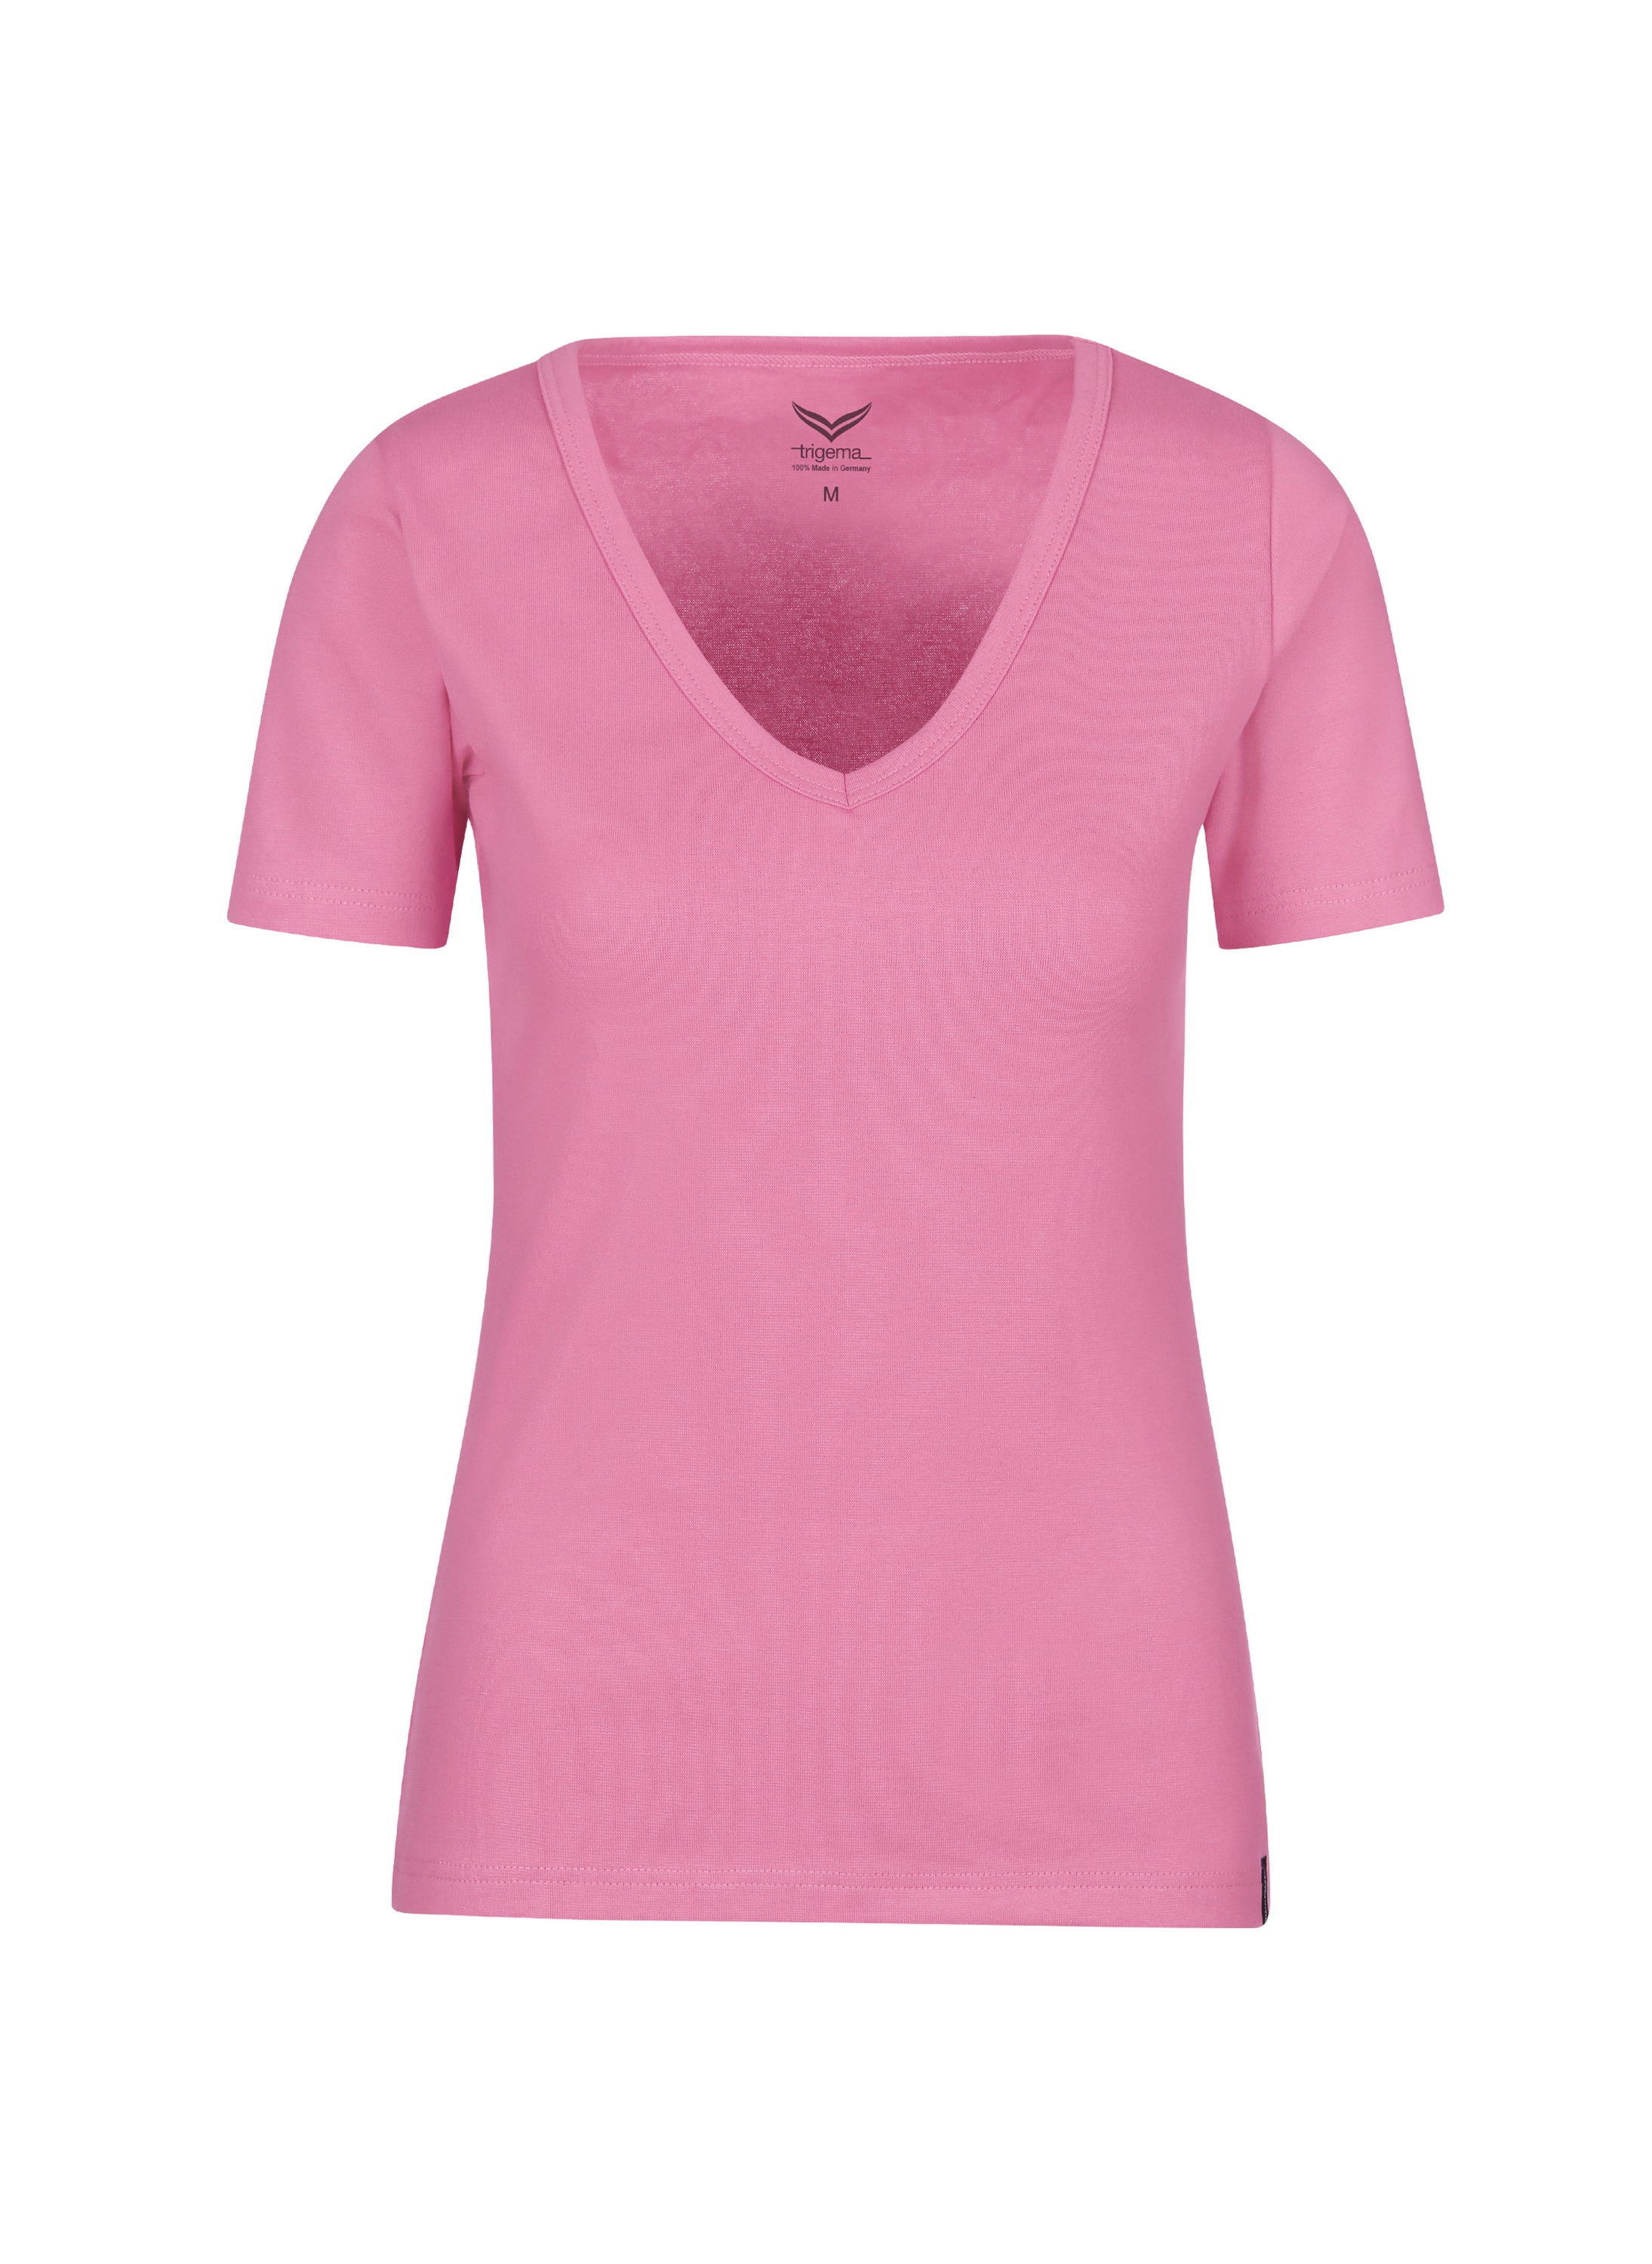 Shop Baumwolle/Elastan« V-Shirt aus »TRIGEMA OTTO Trigema Online im T-Shirt